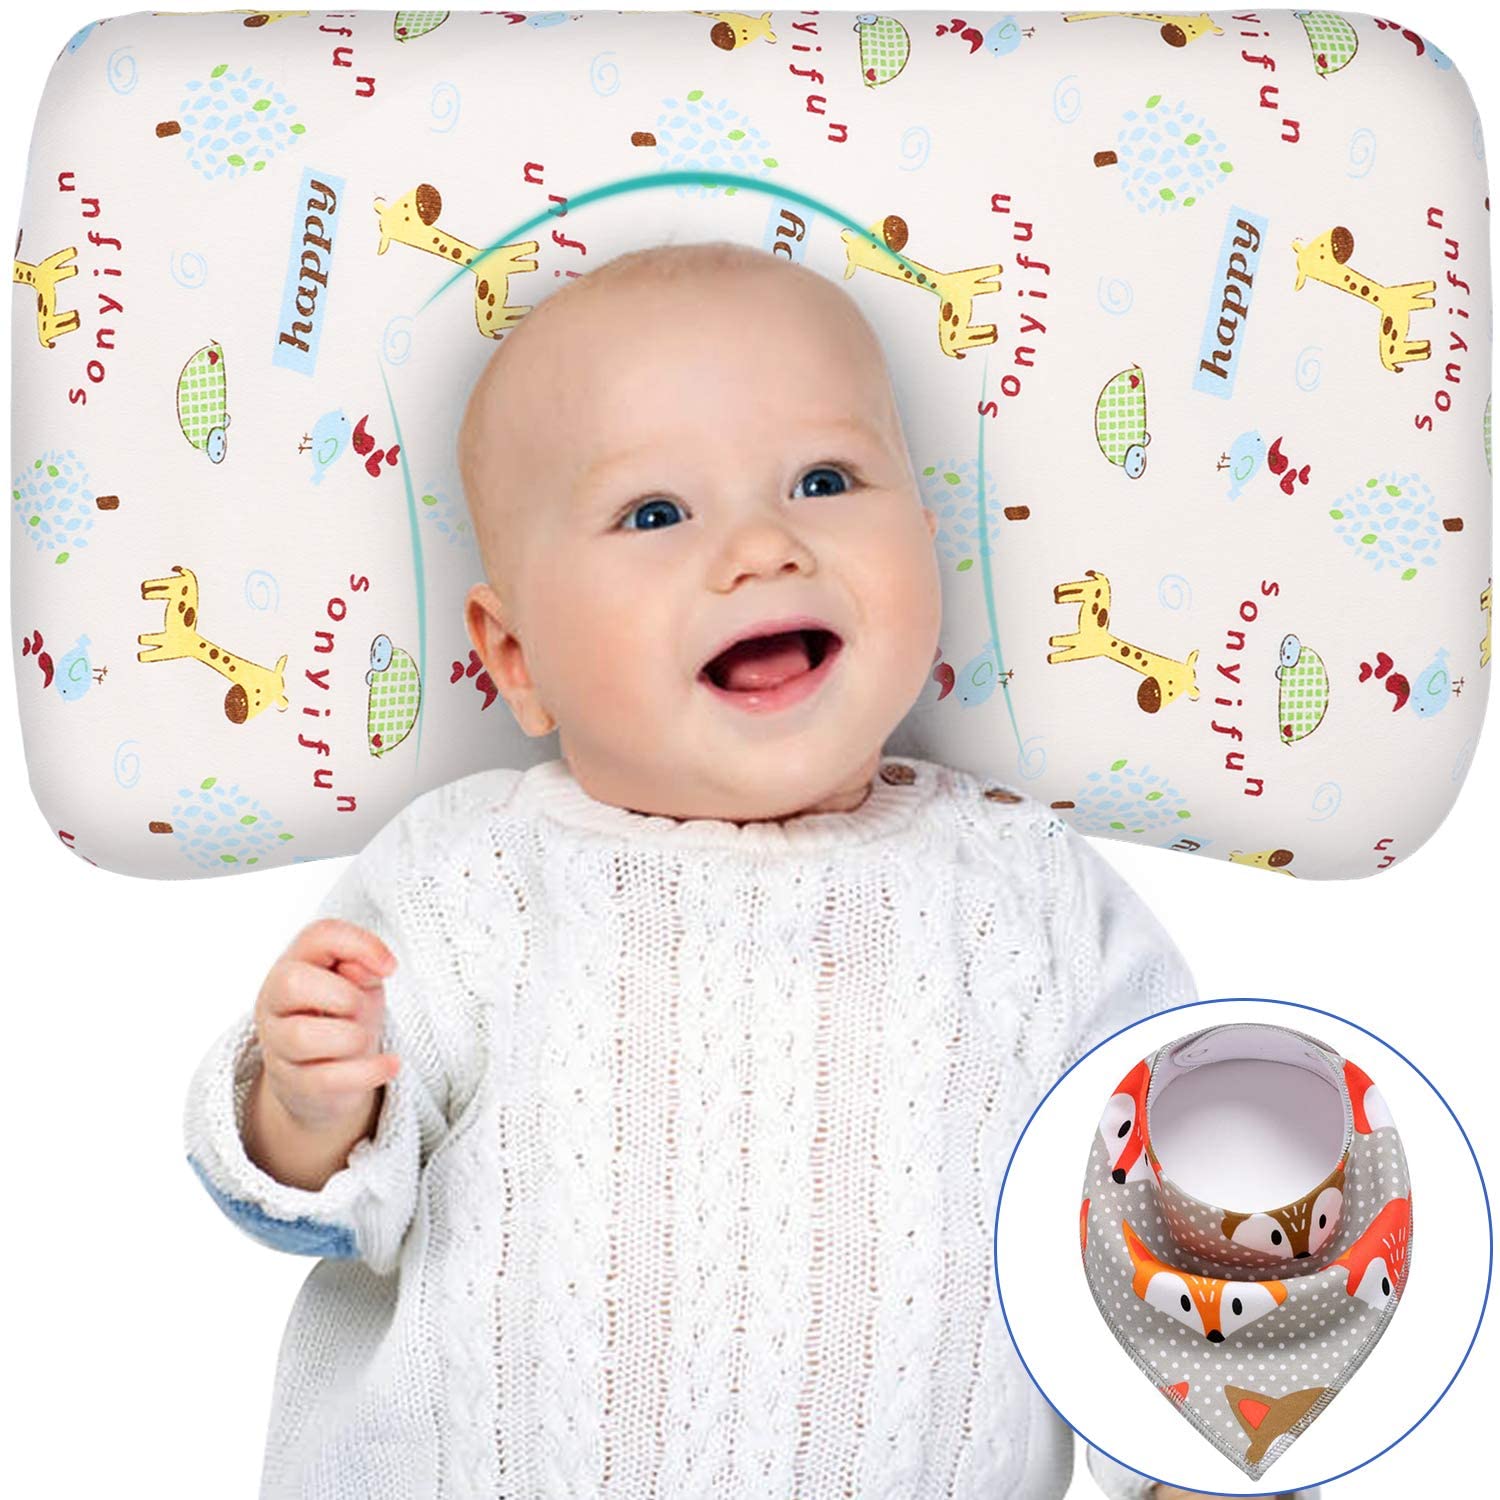 Acksonse Memory Foam Infant & Baby Pillow